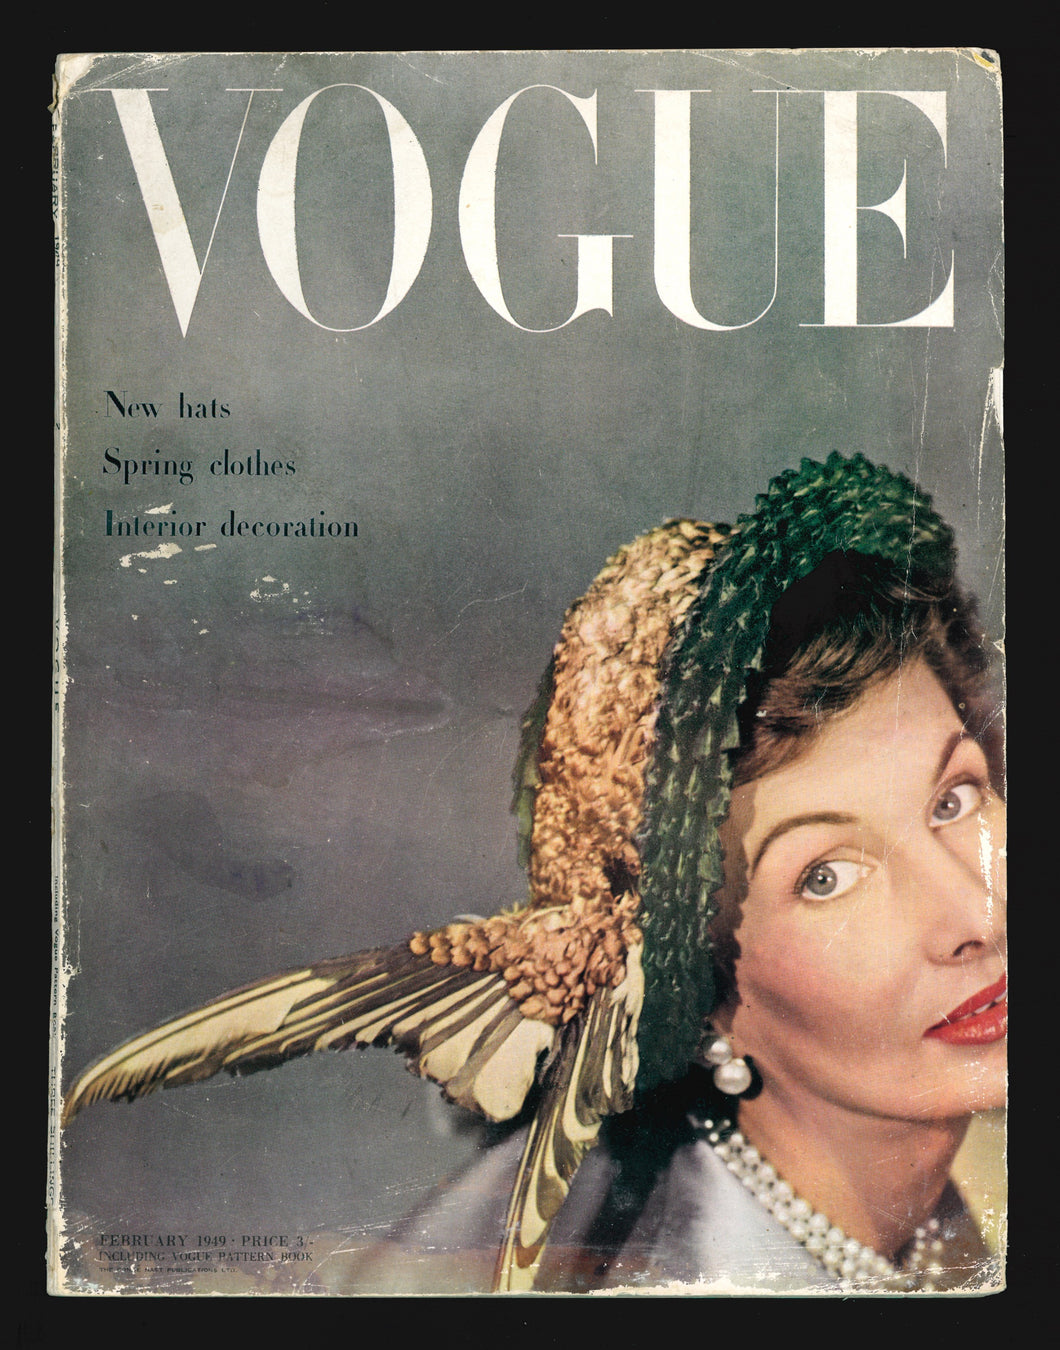 Vogue UK Feb 1949